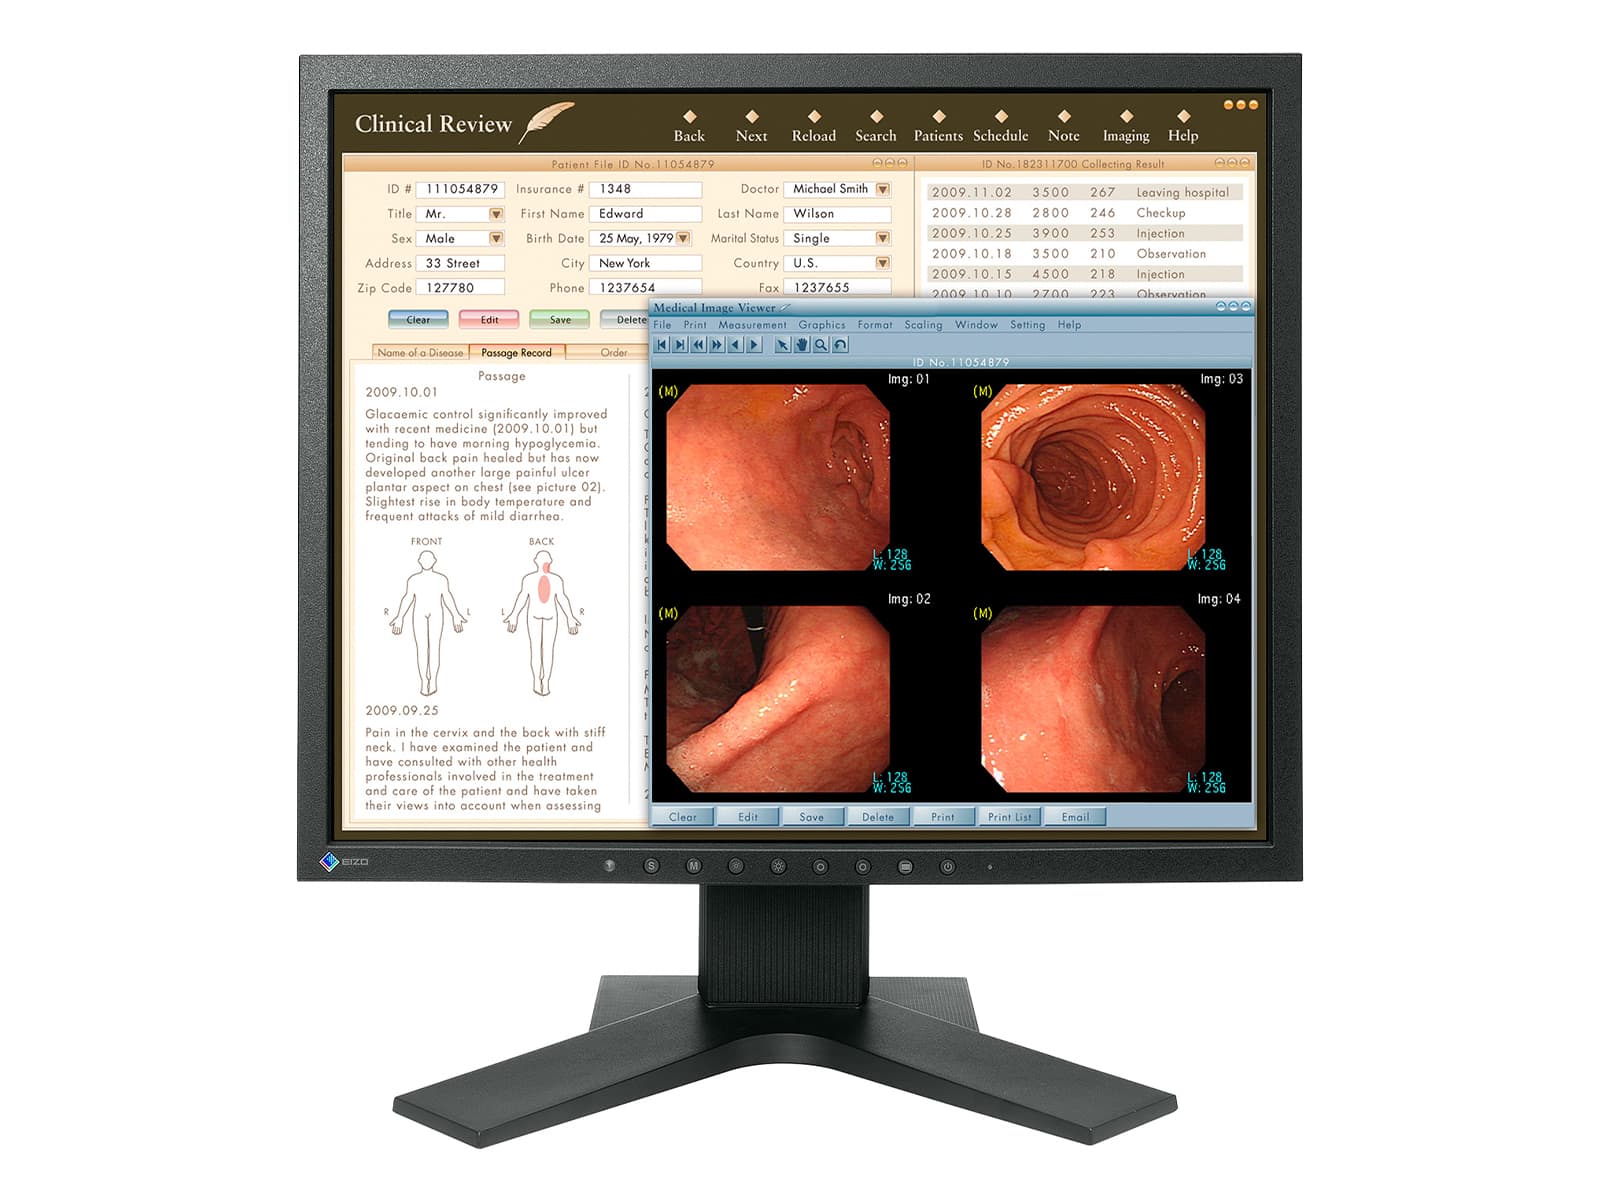 Eizo RadiForce MX192 1MP 19" Color LCD Clinical Review Monitor (0FTD2046) Monitors.com 